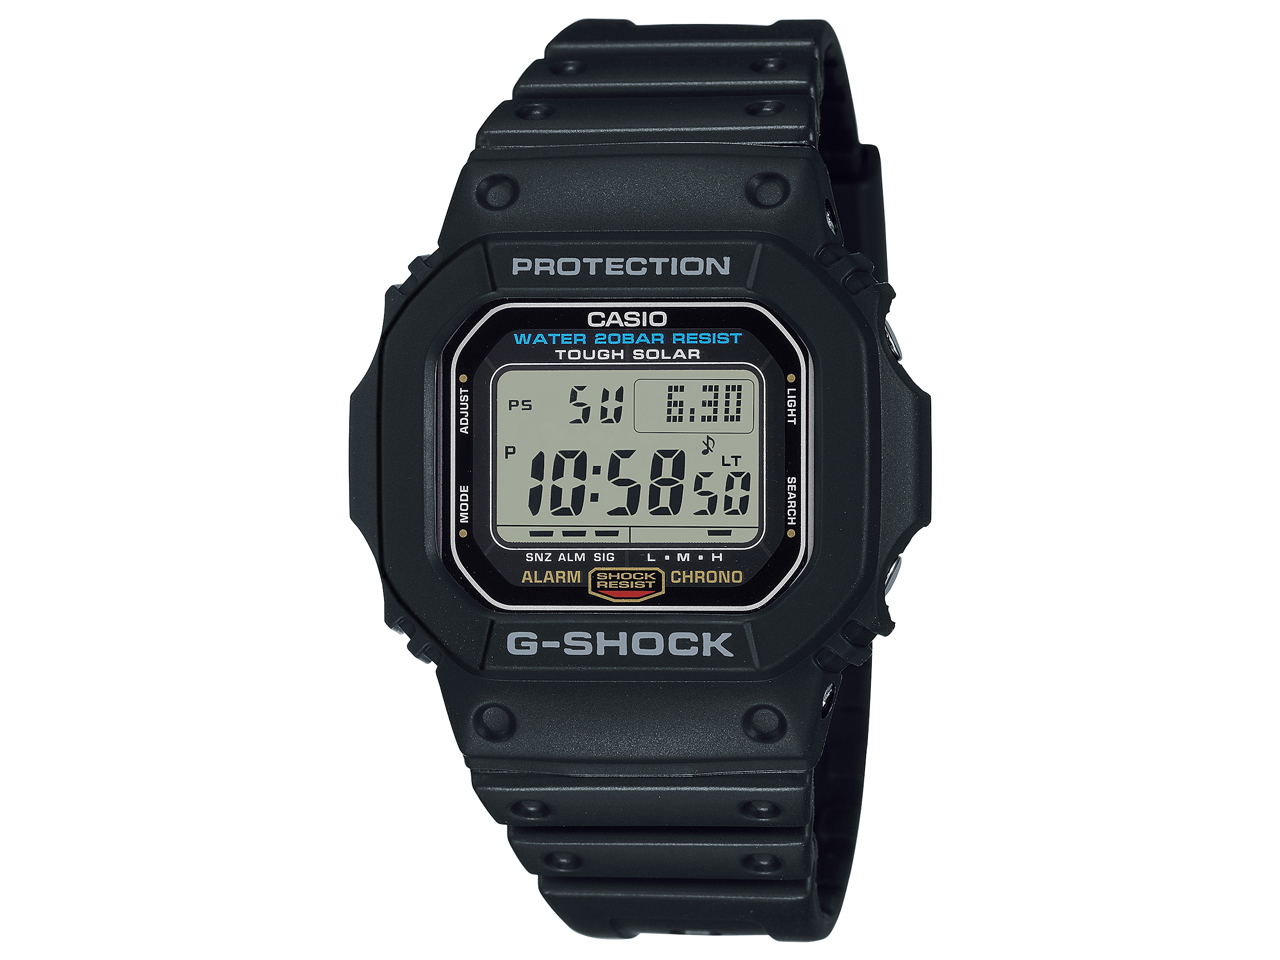 G-SHOCK G-5600UE-1JF